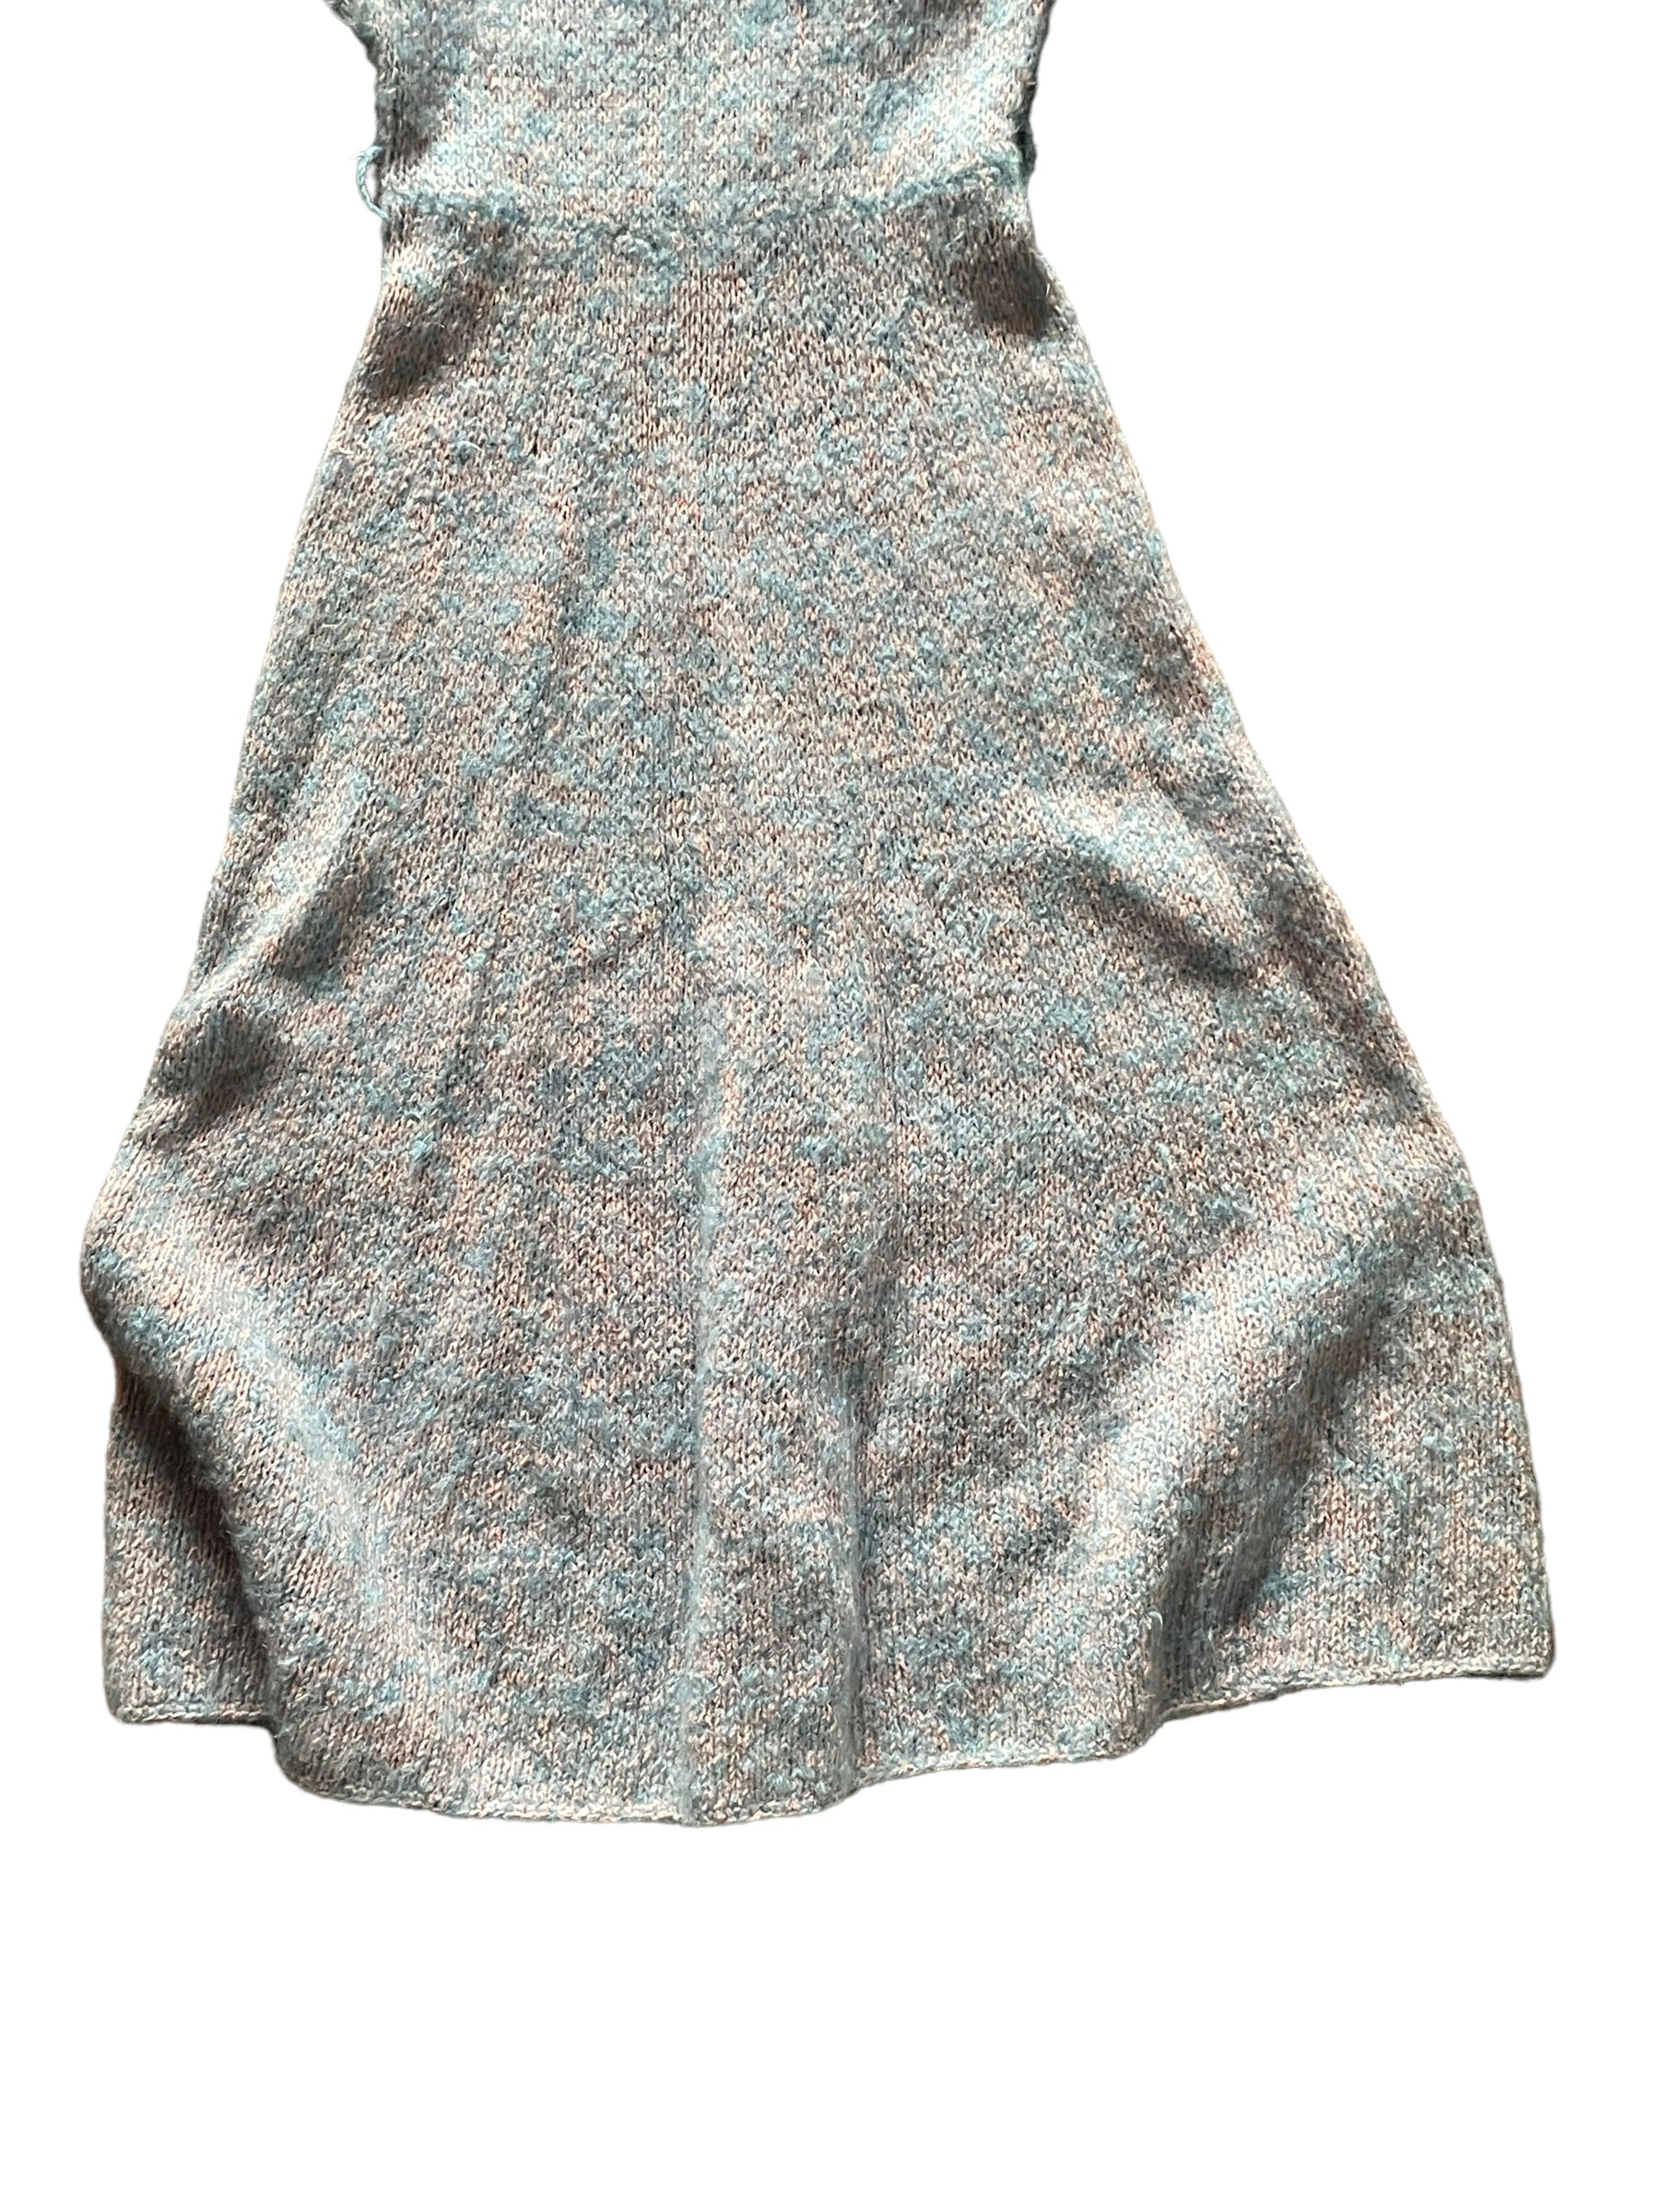 Back of skirt view of Vintage 1940s Knit Dress Sz XS-M |  Barn Owl Vintage Dresses | Seattle Vintage Ladies Clothing